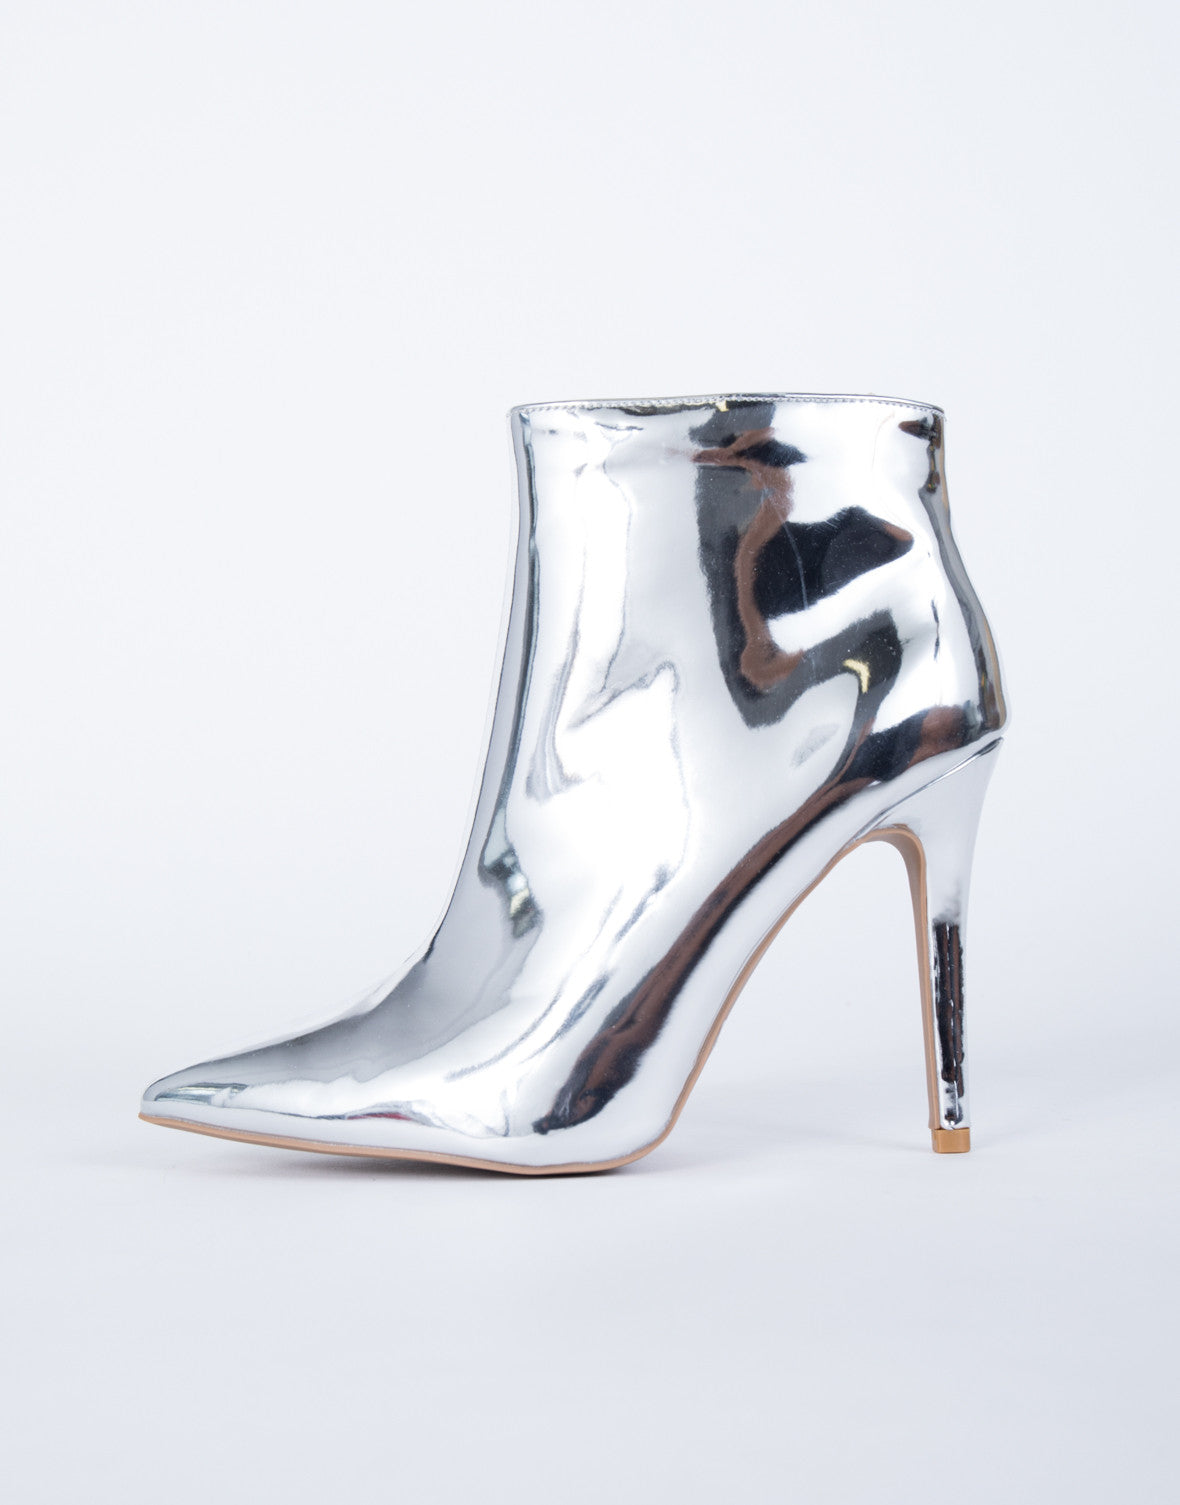 silver metallic boot